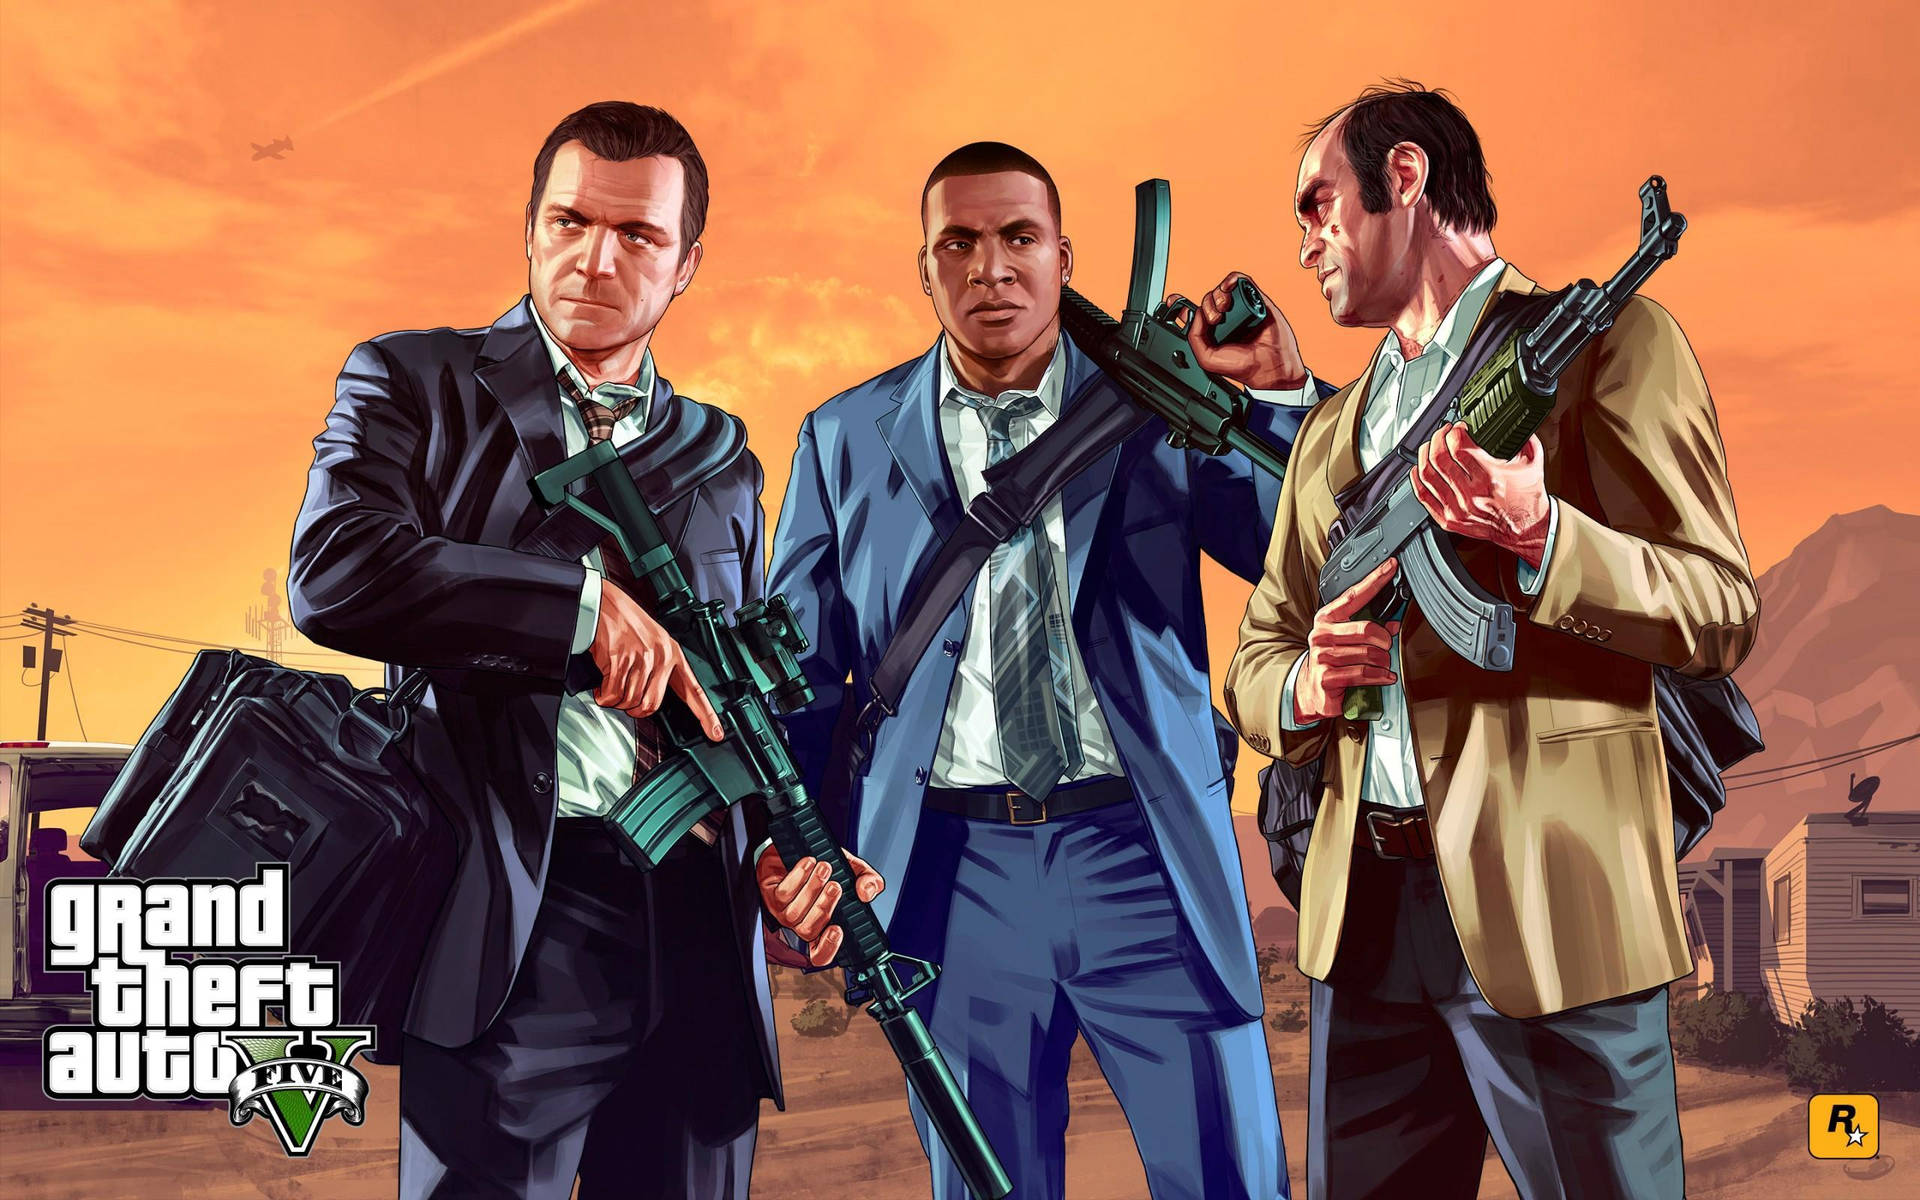 Grand Theft Auto V Protagonists Under Orange Skies Background